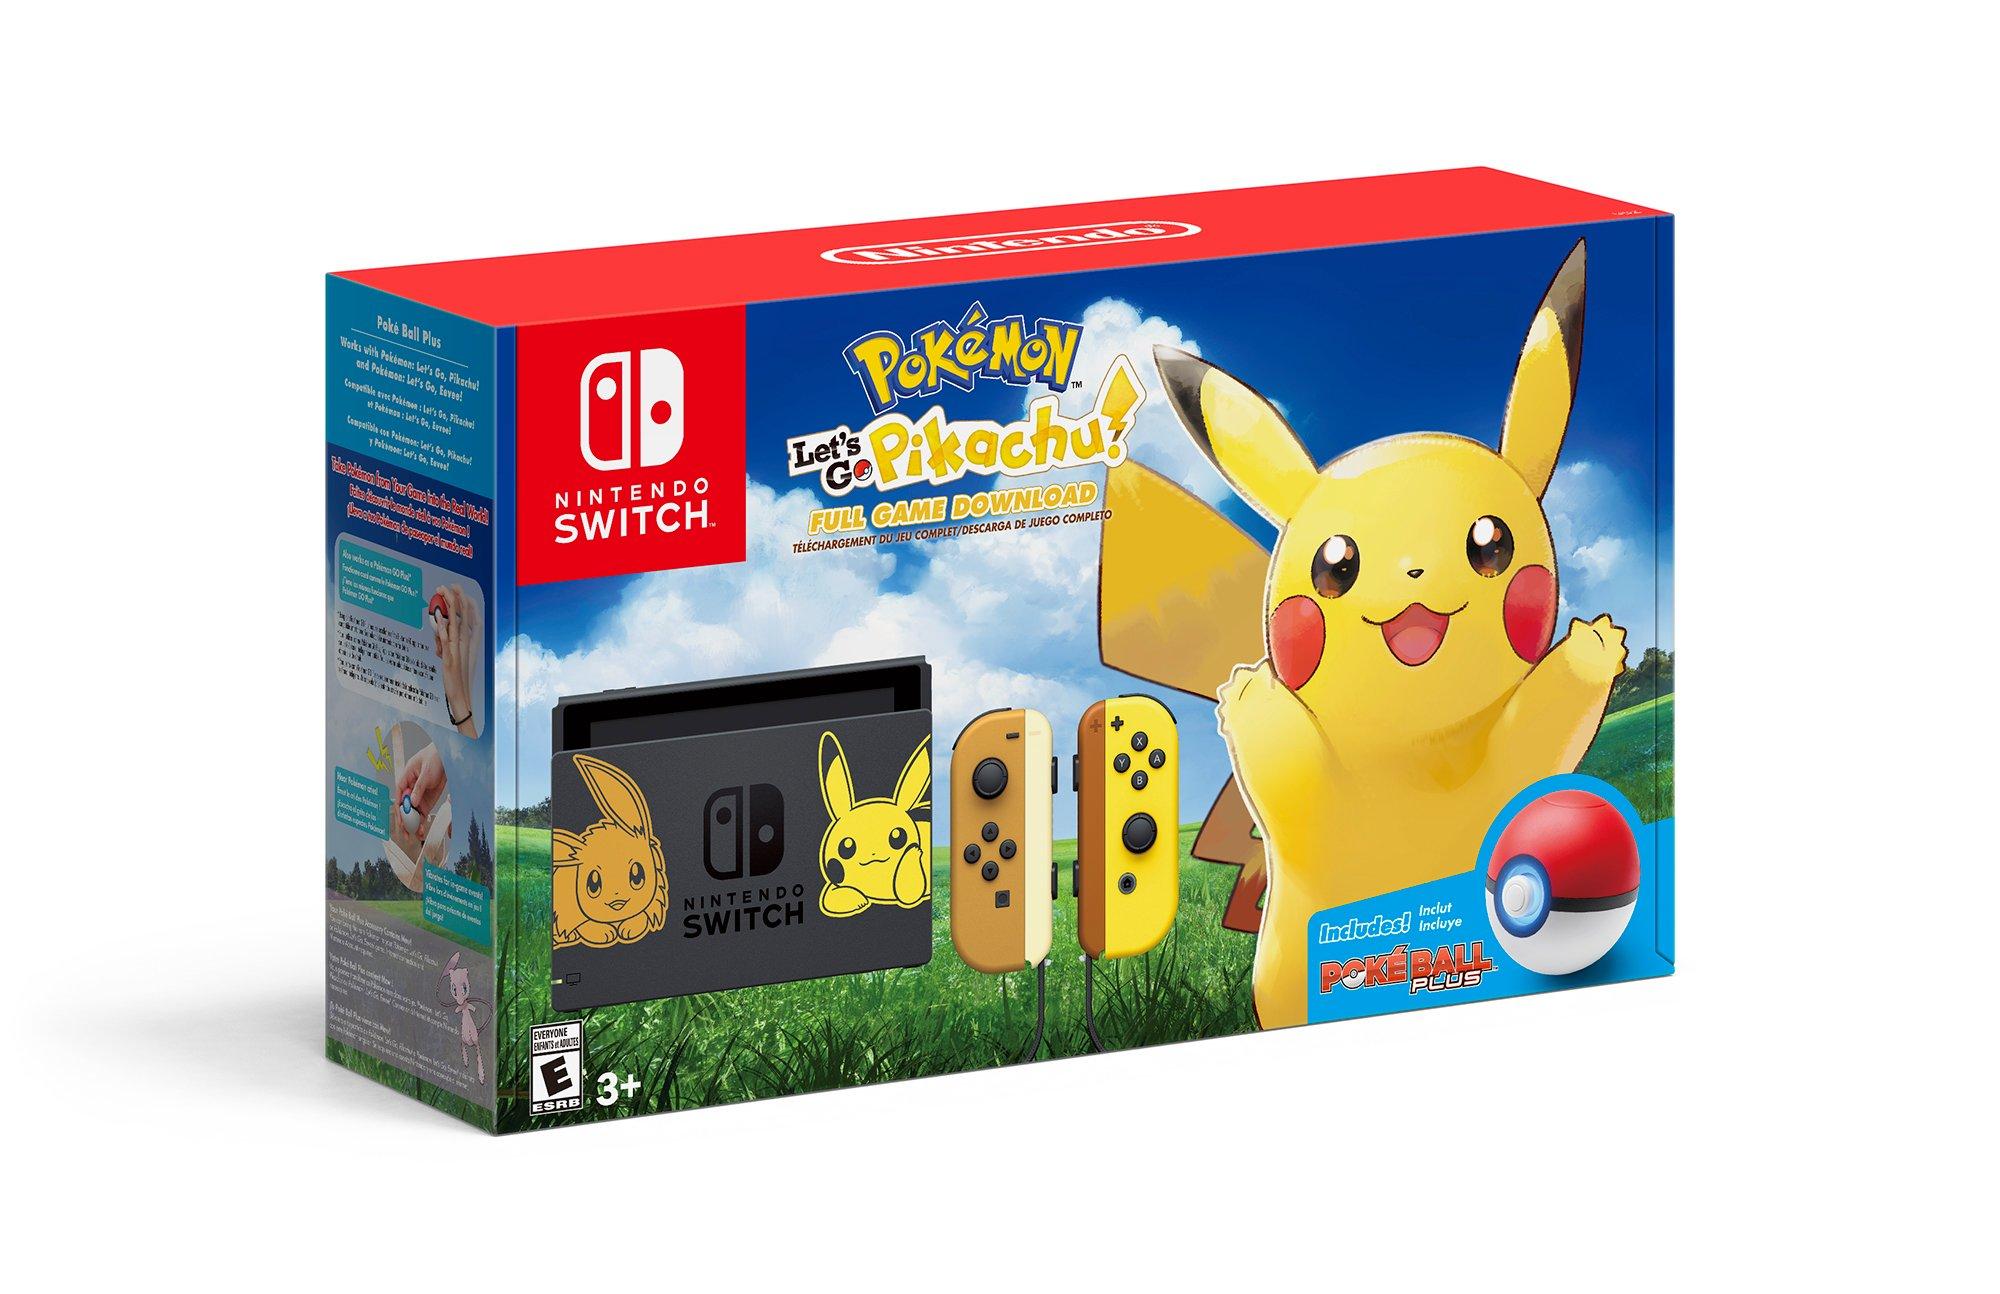 Nintendo Switch Pikachu Eevee Edition With Pokemon Lets Go Pikachu Bundle Nintendo Switch Gamestop - 